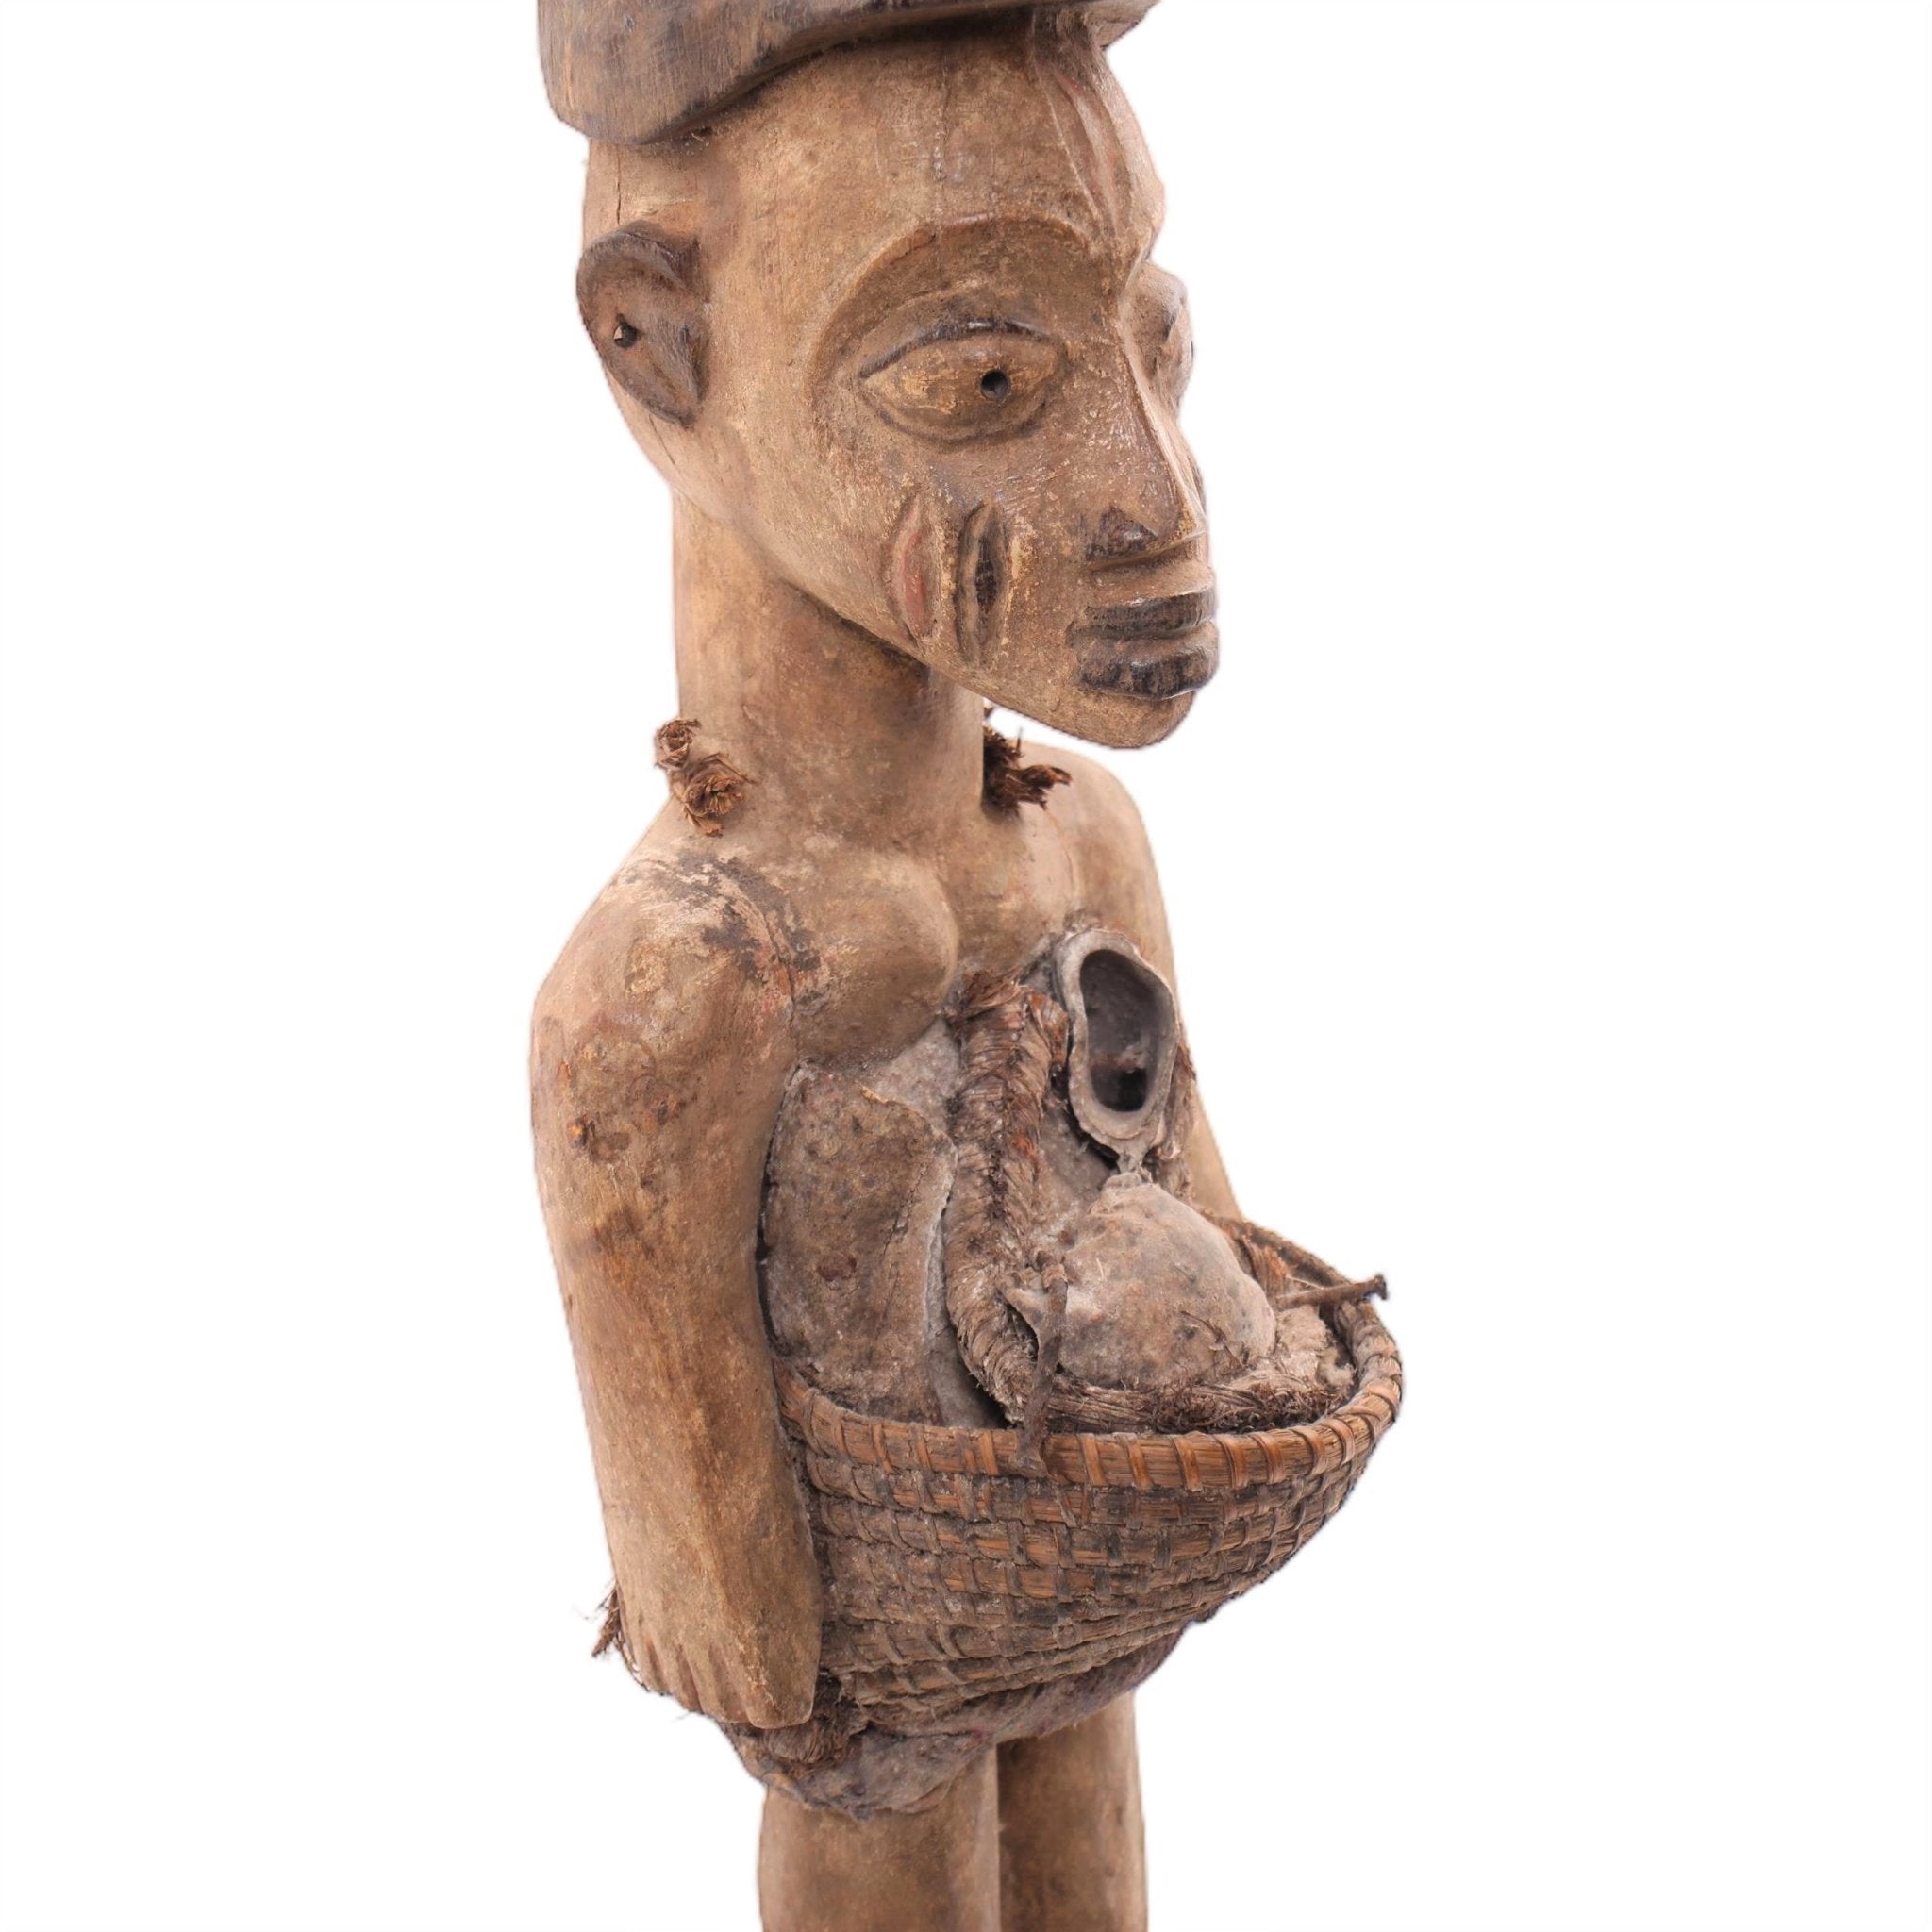 Basonge/Songye Tribe Figurine ~27.6" Tall - African Angel Art - Figurine